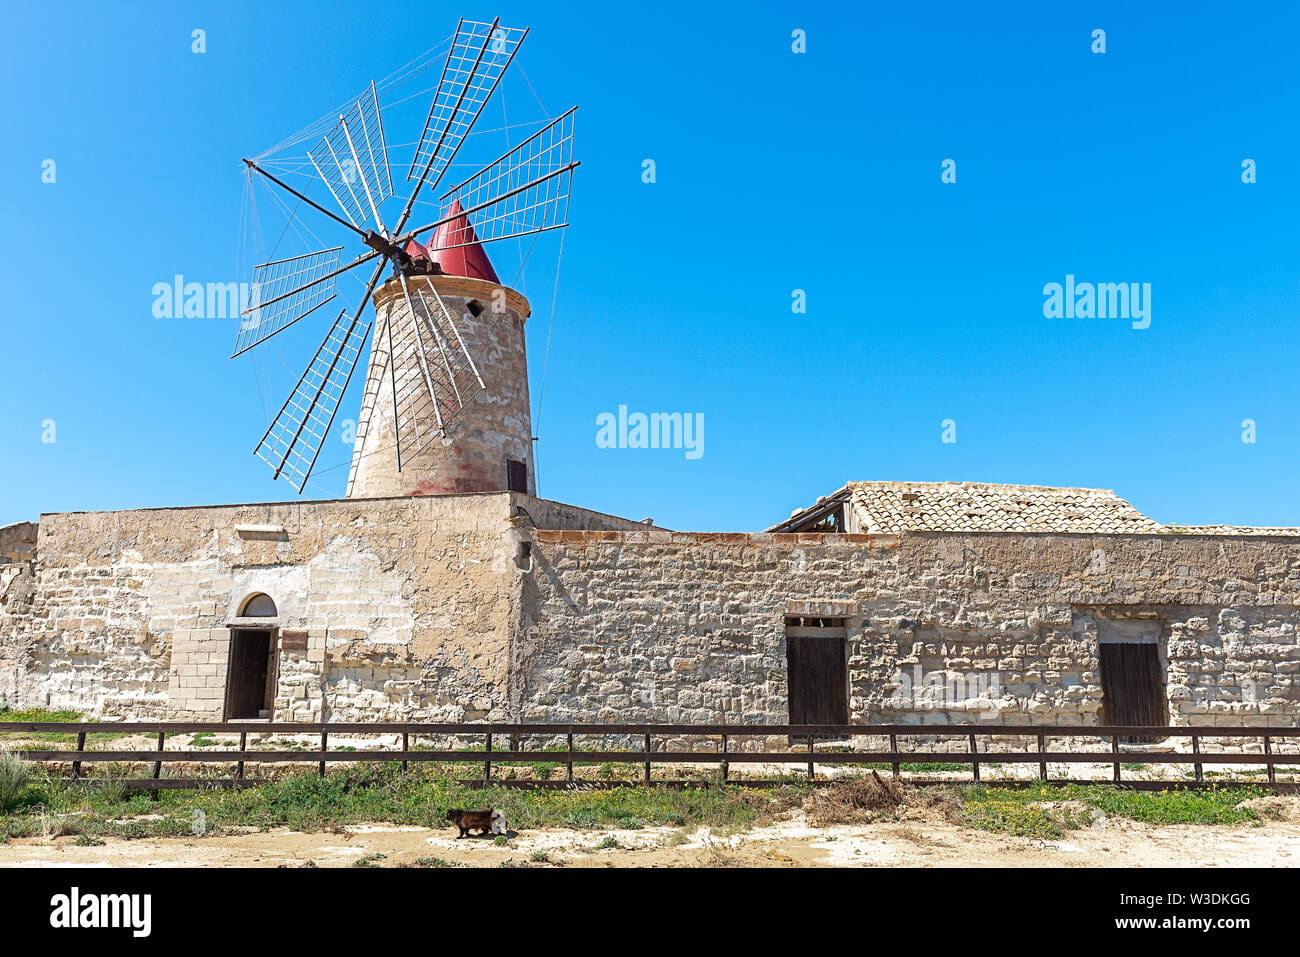 Windmill at the salt flats of Trapani, Sicily, Italy Stock Photo